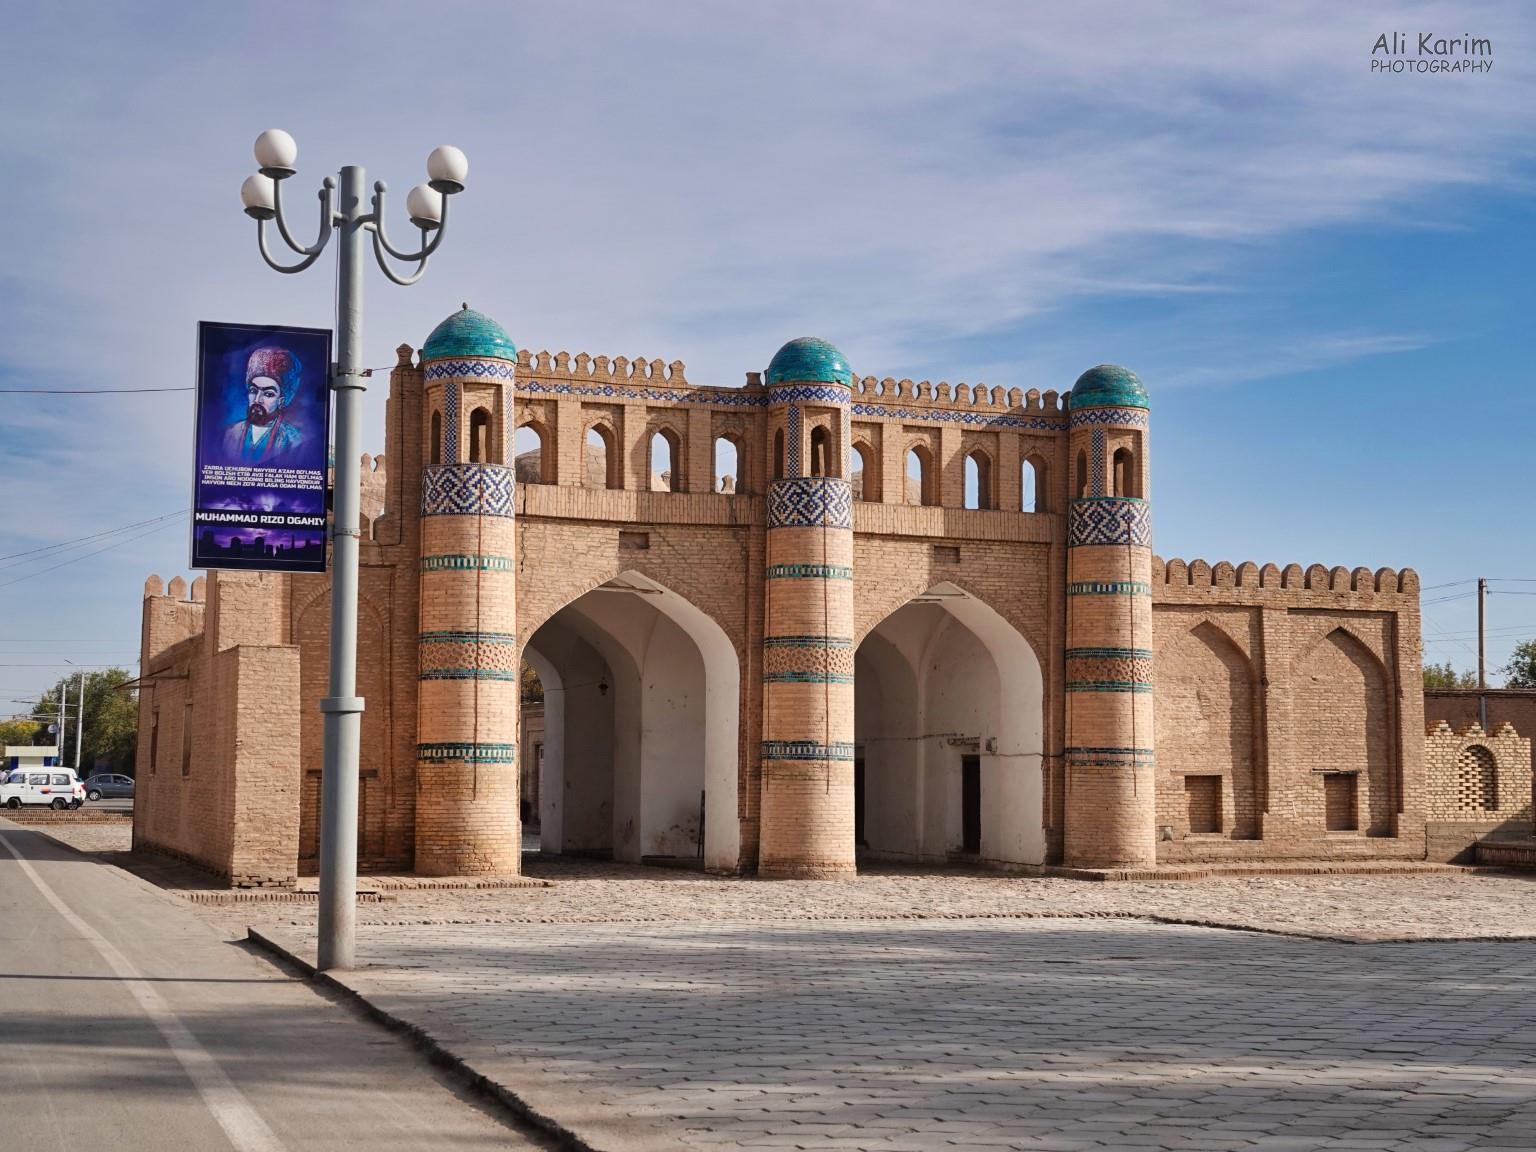 Khiva, Oct 2019, Interesting mosque